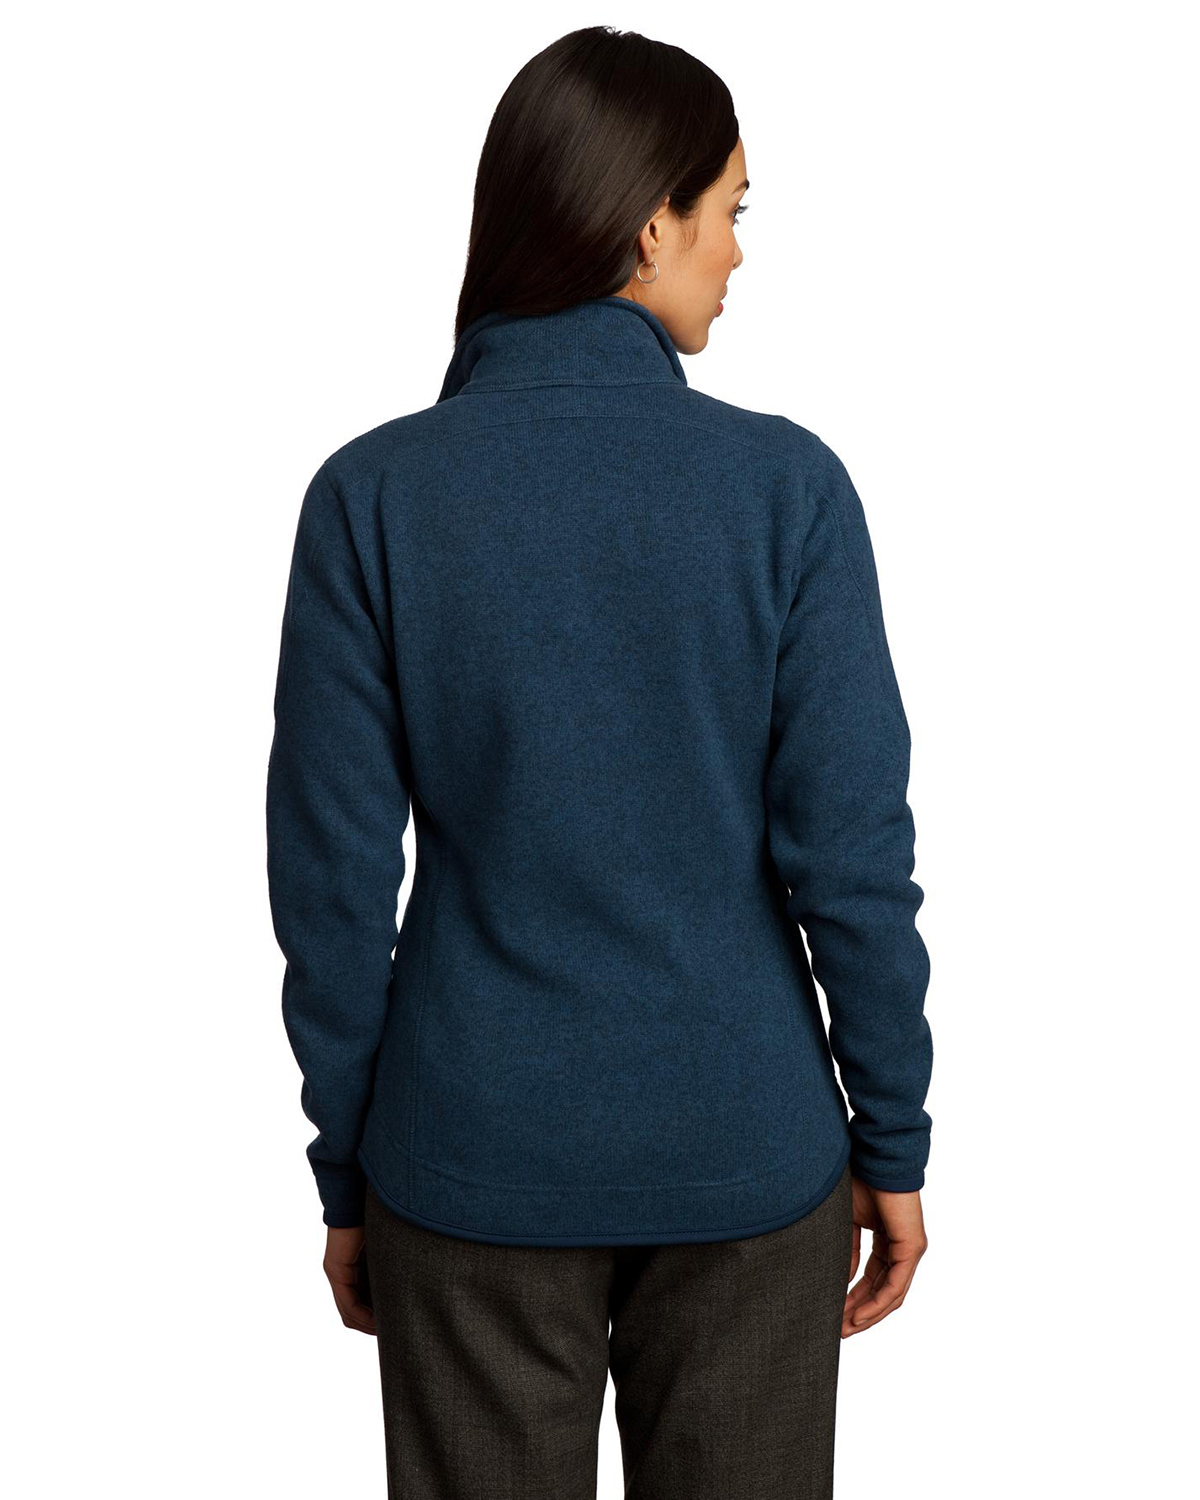 Red House RH55 Women Sweater Fleece Full-Zip Jacket | GotApparel.com